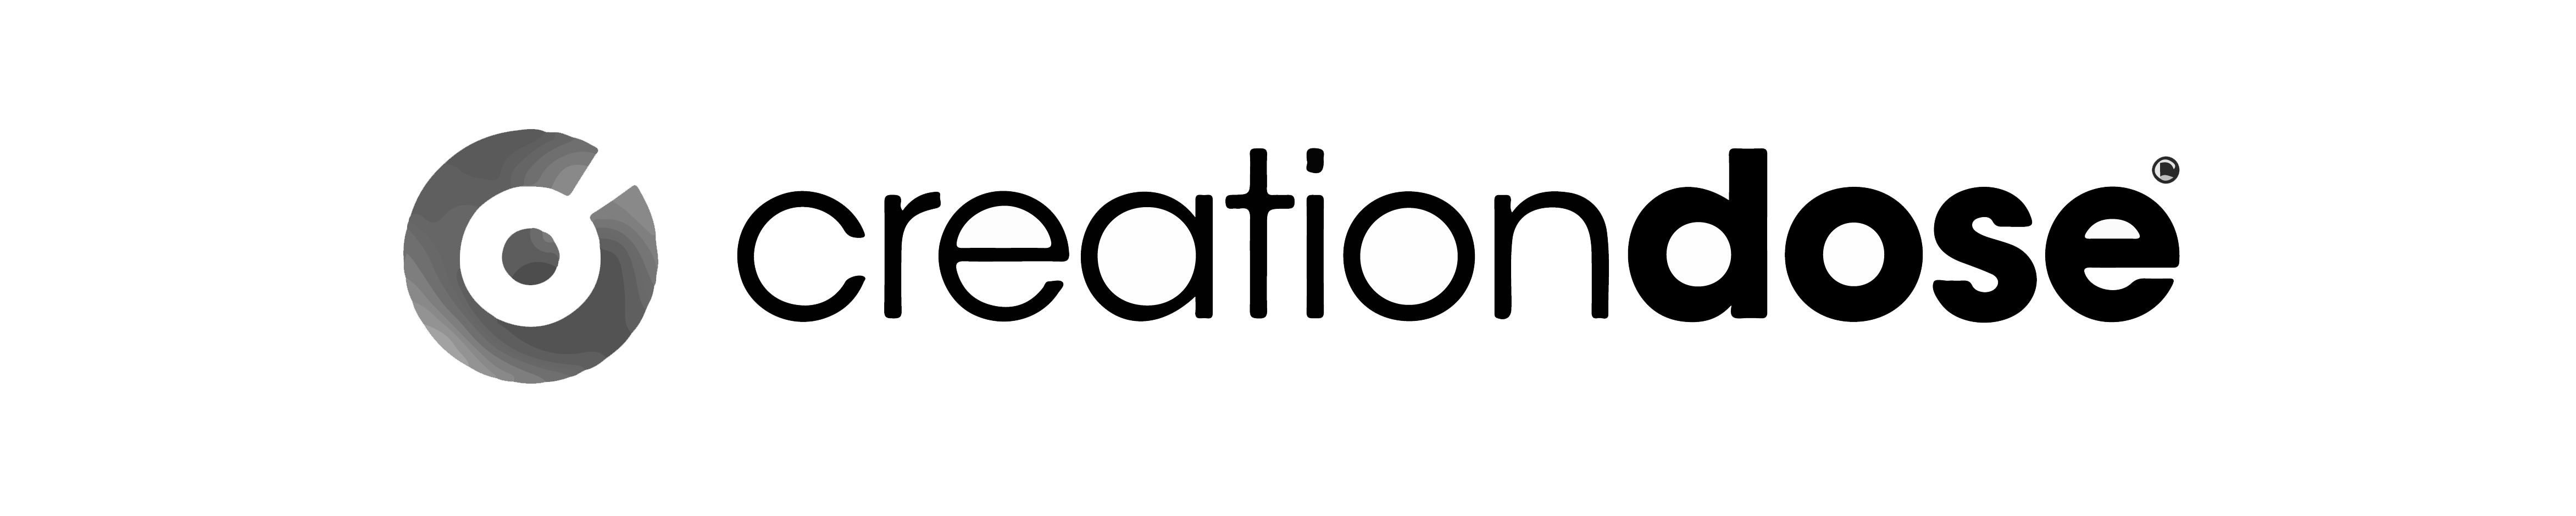 creationdose_logo